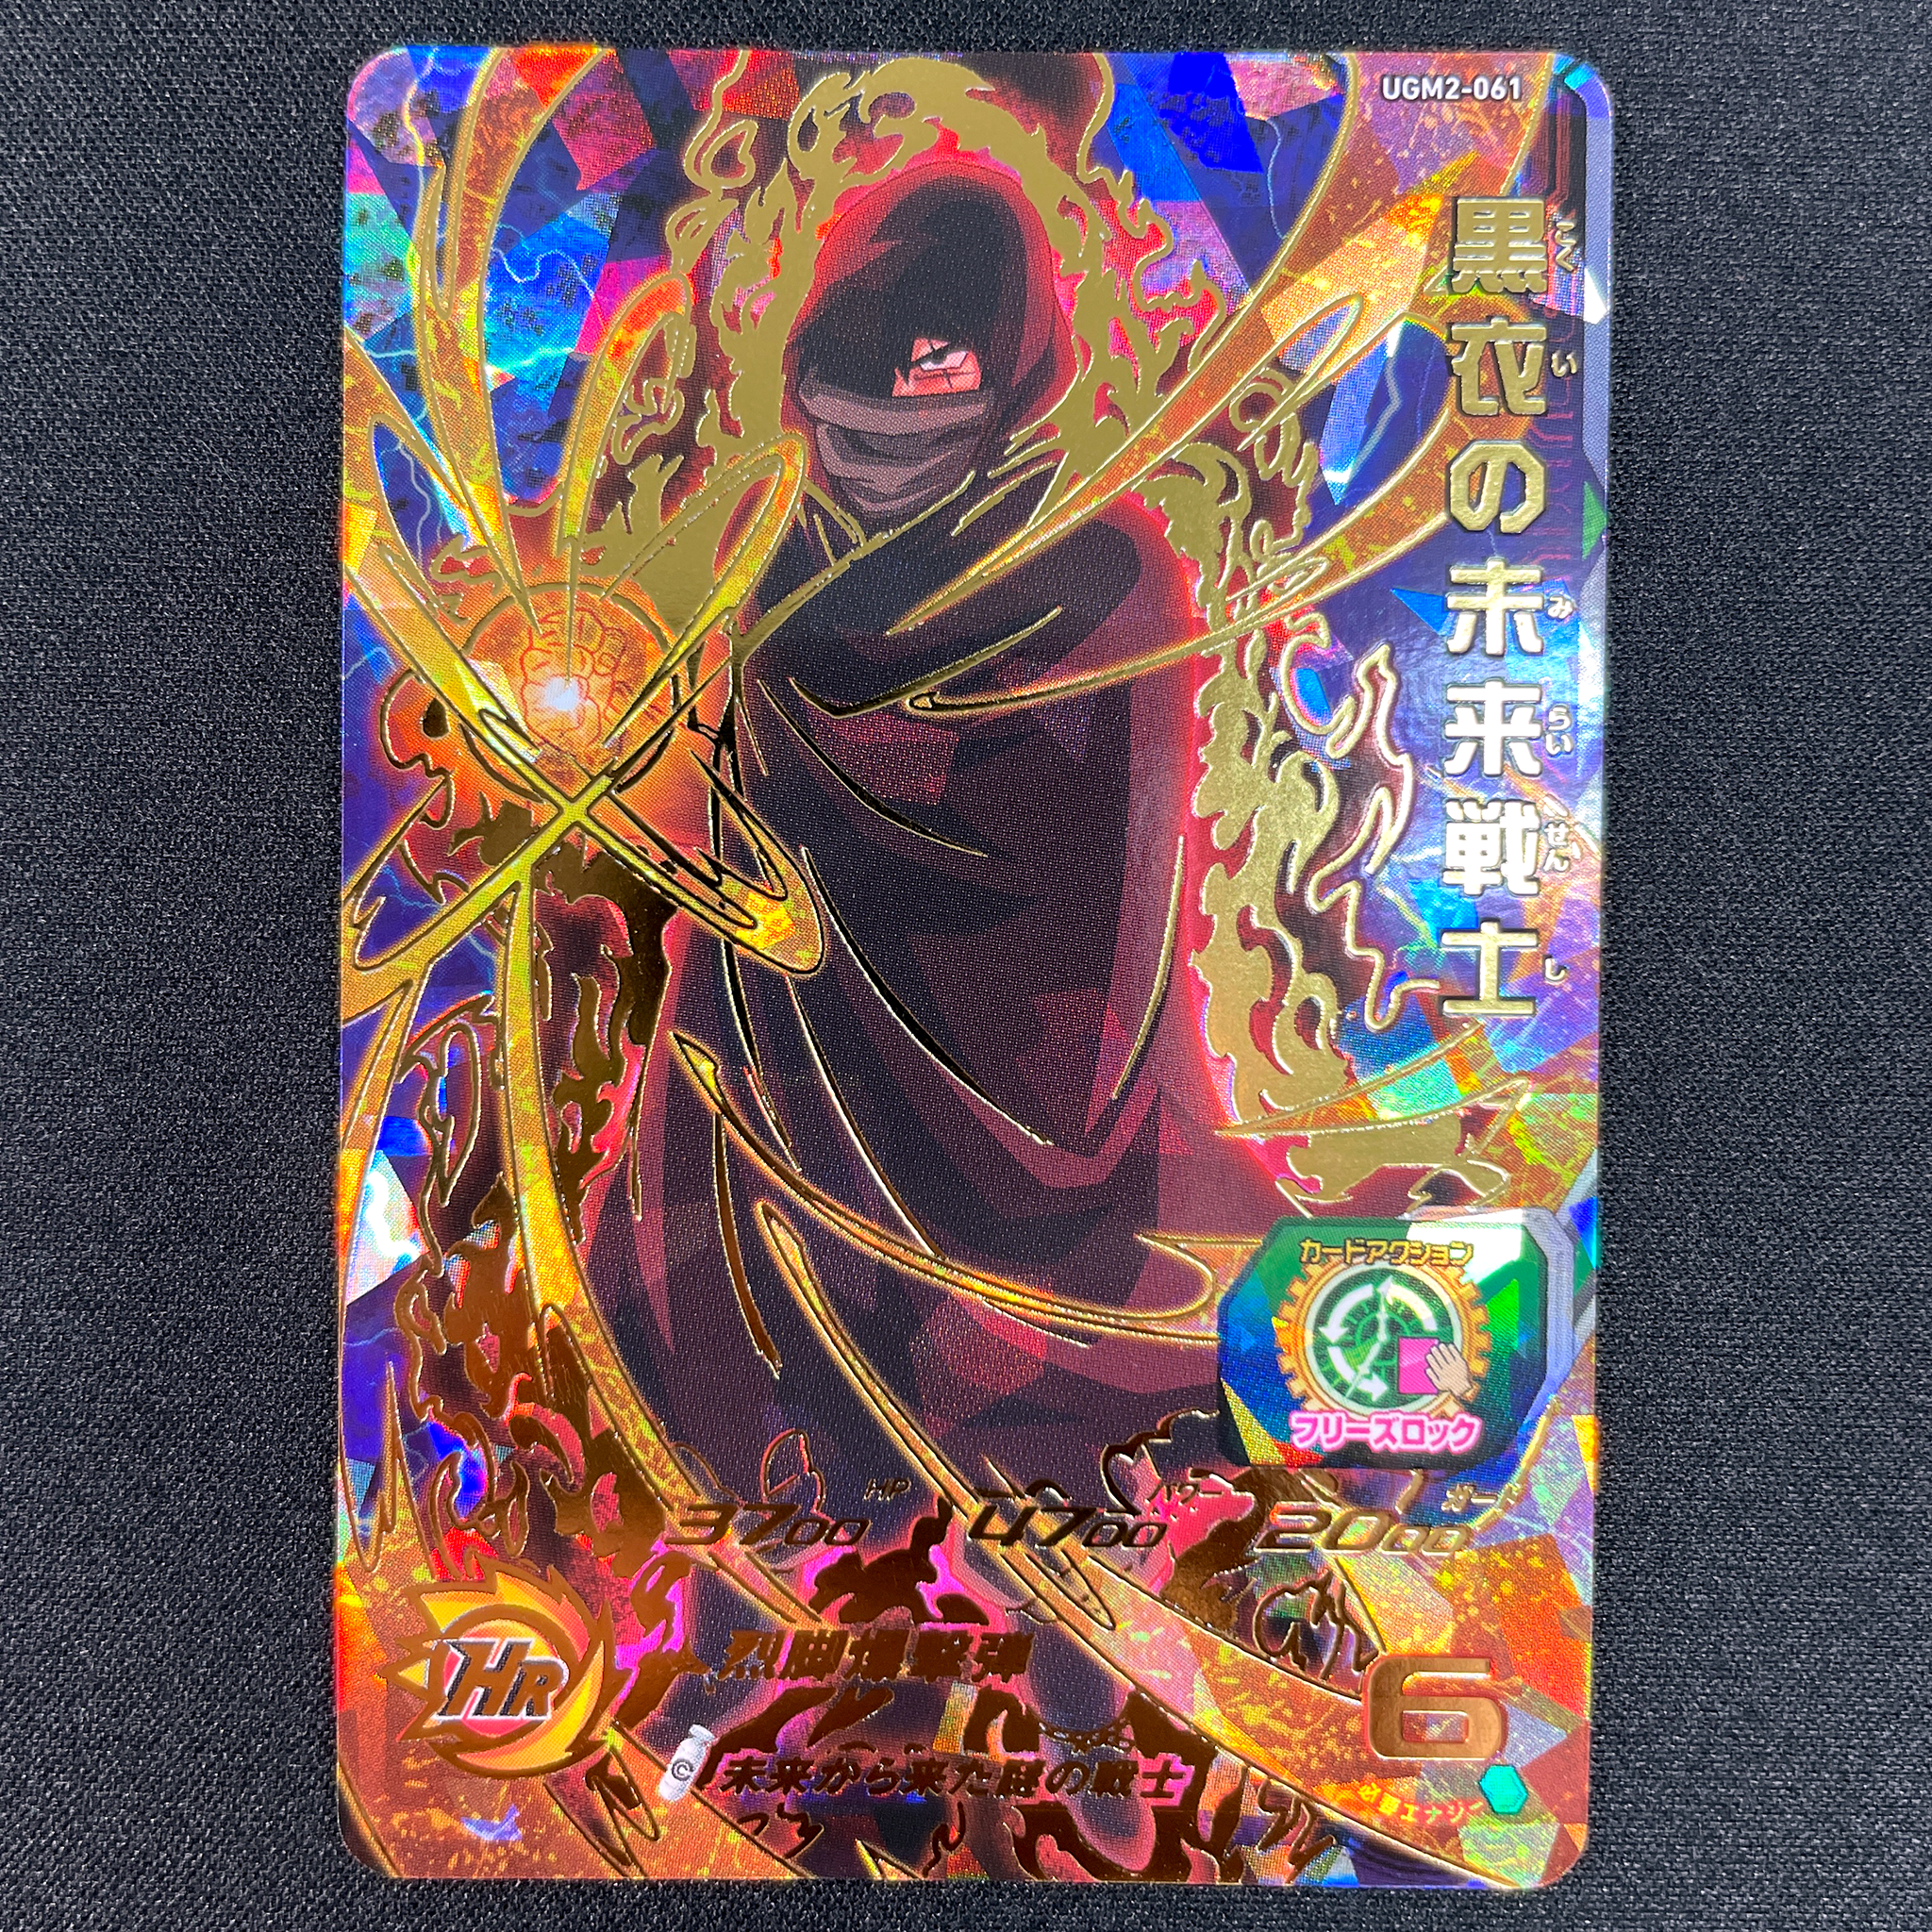 SUPER DRAGON BALL HEROES UGM2-061 Ultimate Rare card  Kokui no Mirai Senshi